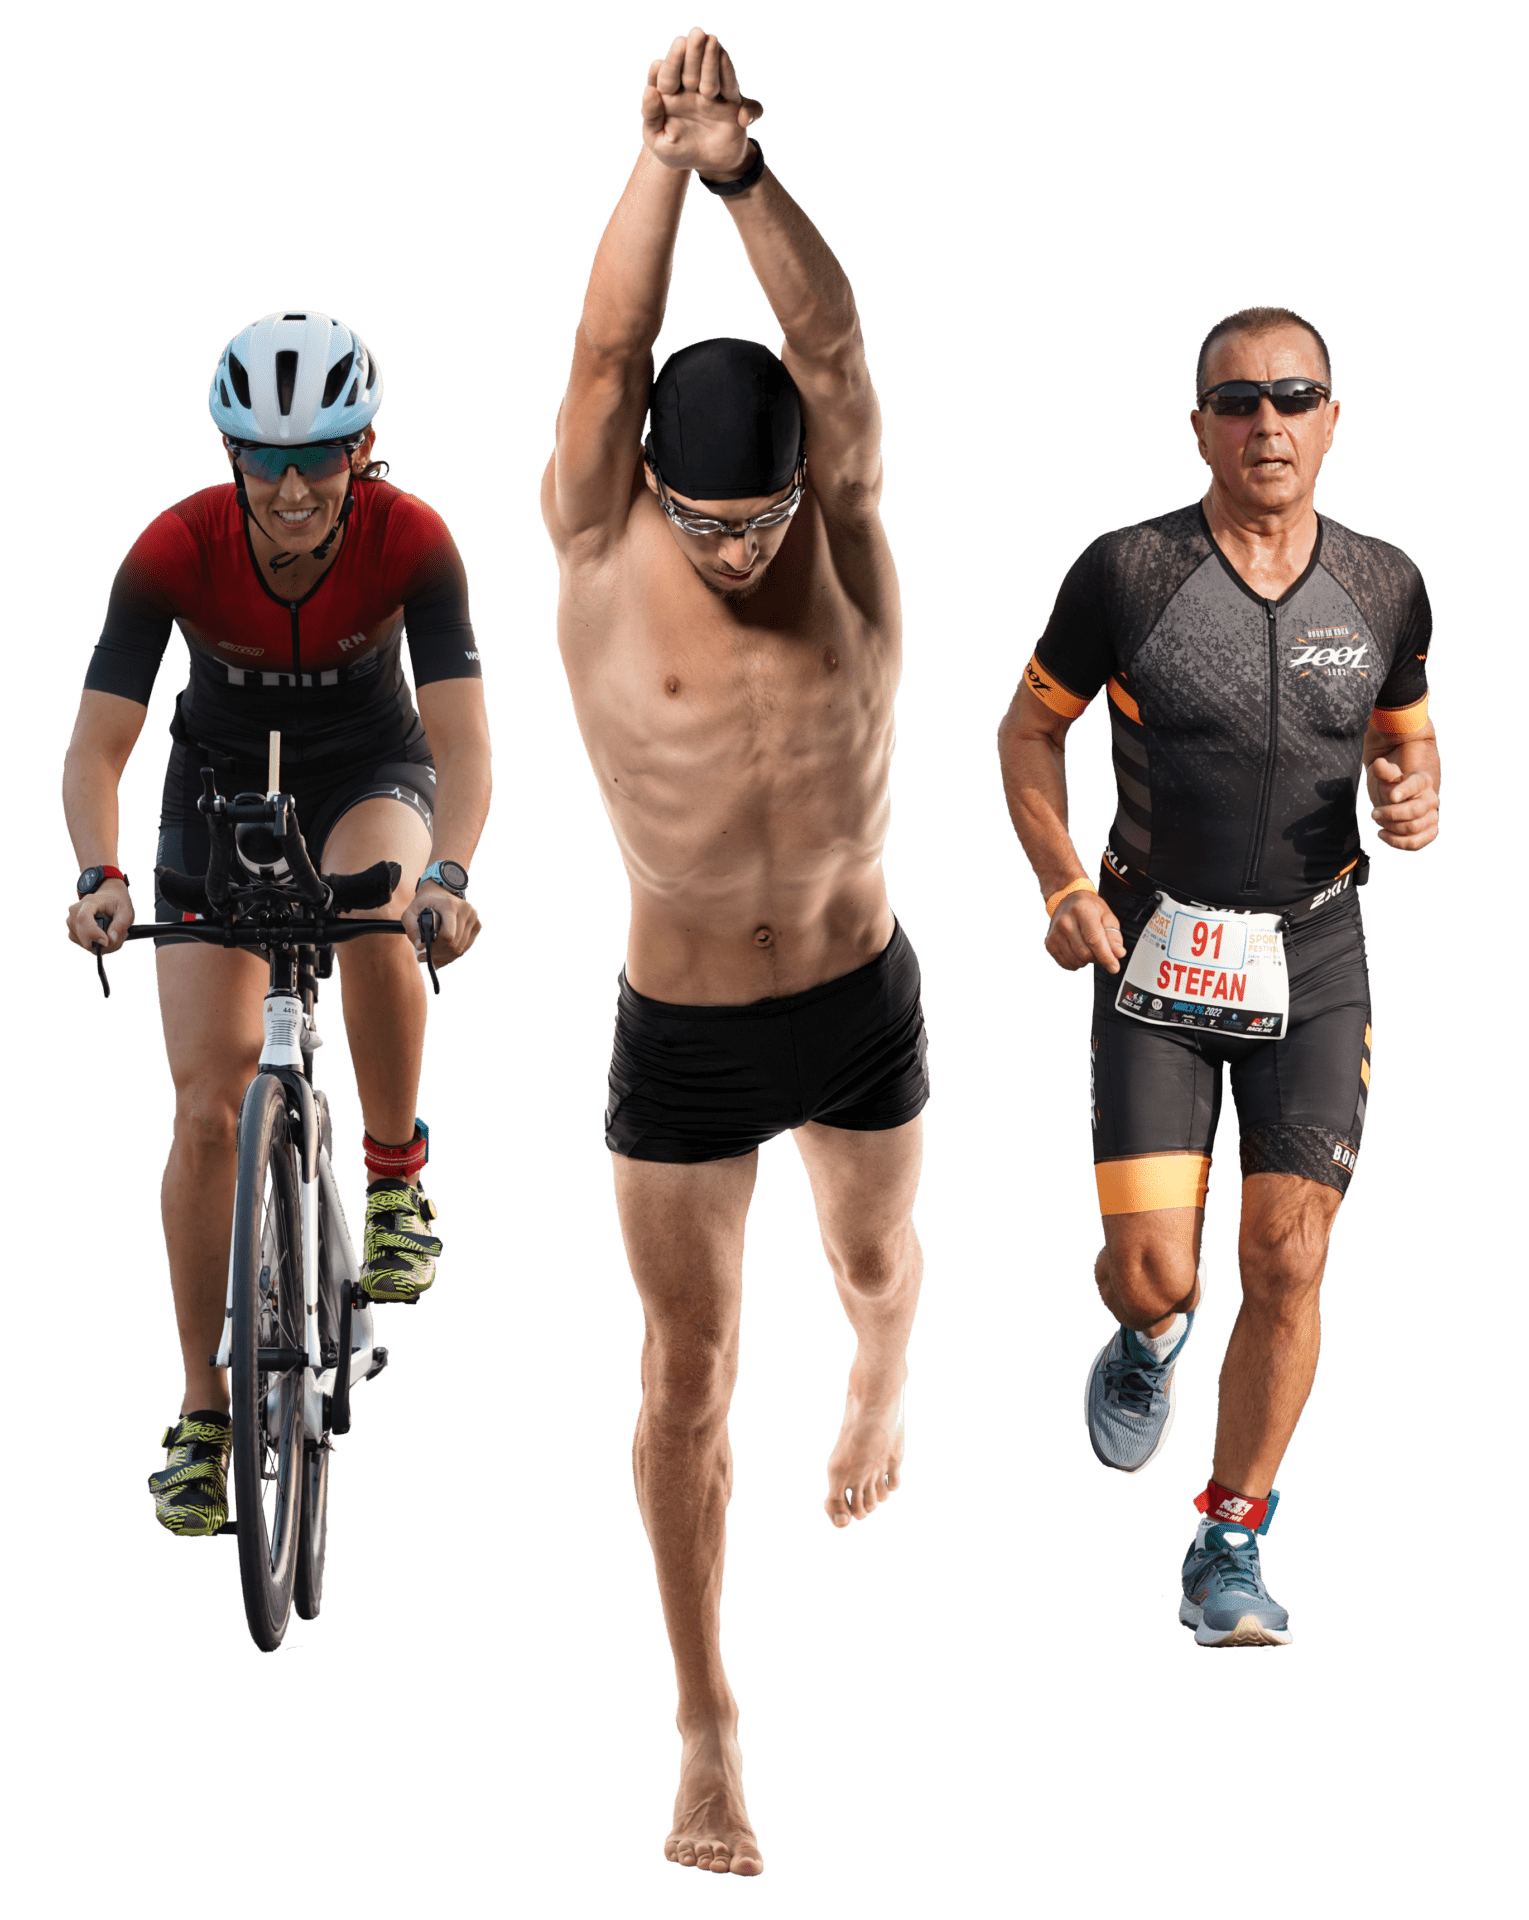 UAE Triathlon Store: Emirates Race Calendar, Sports Products